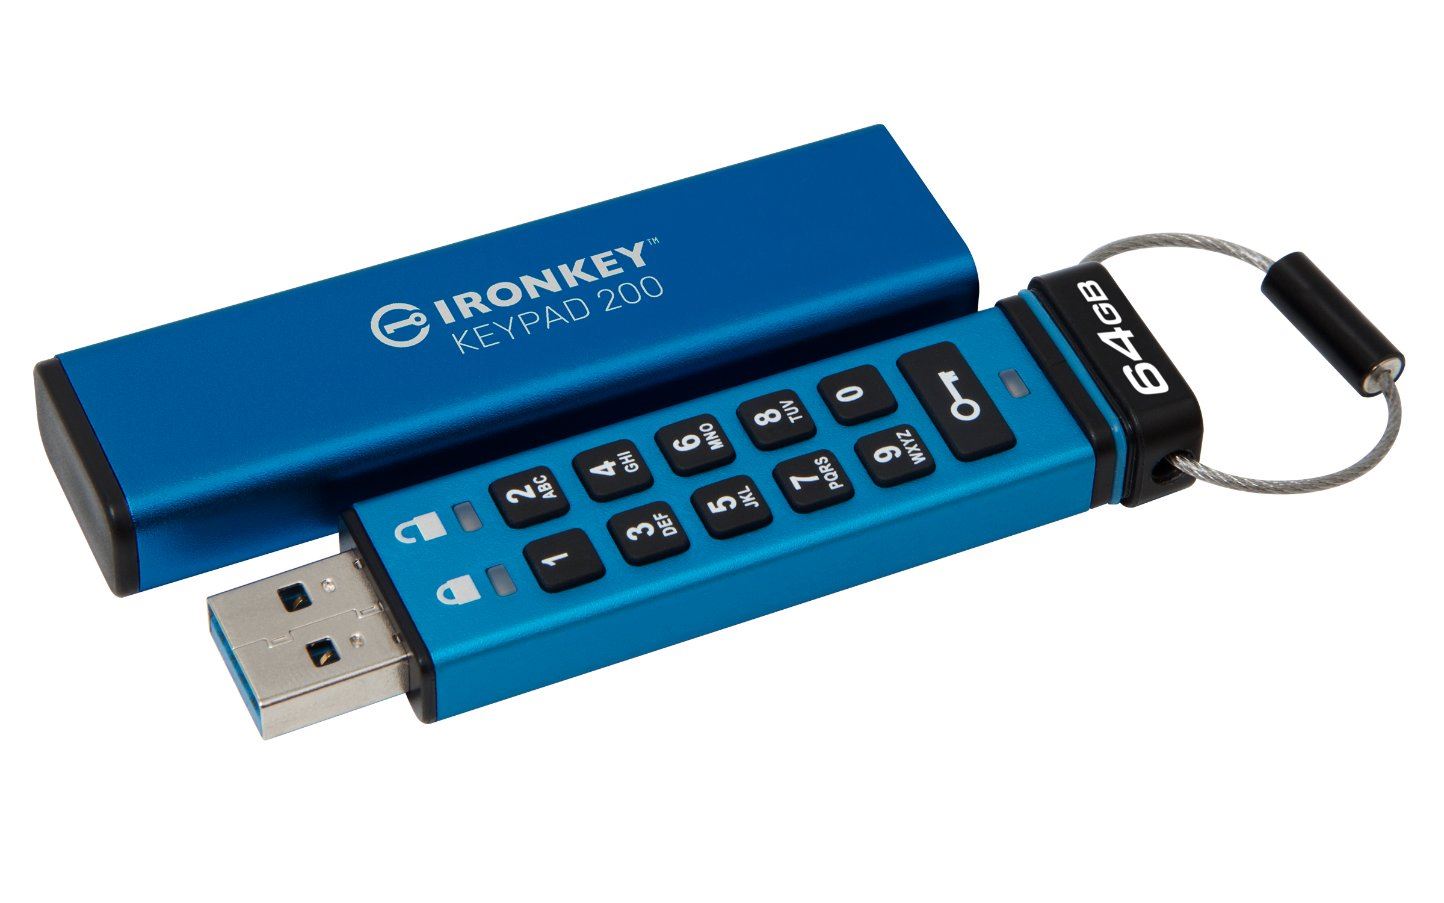 Kingston Flash Disk IronKey 64GB Keypad 200 encrypted USB flash drive4 